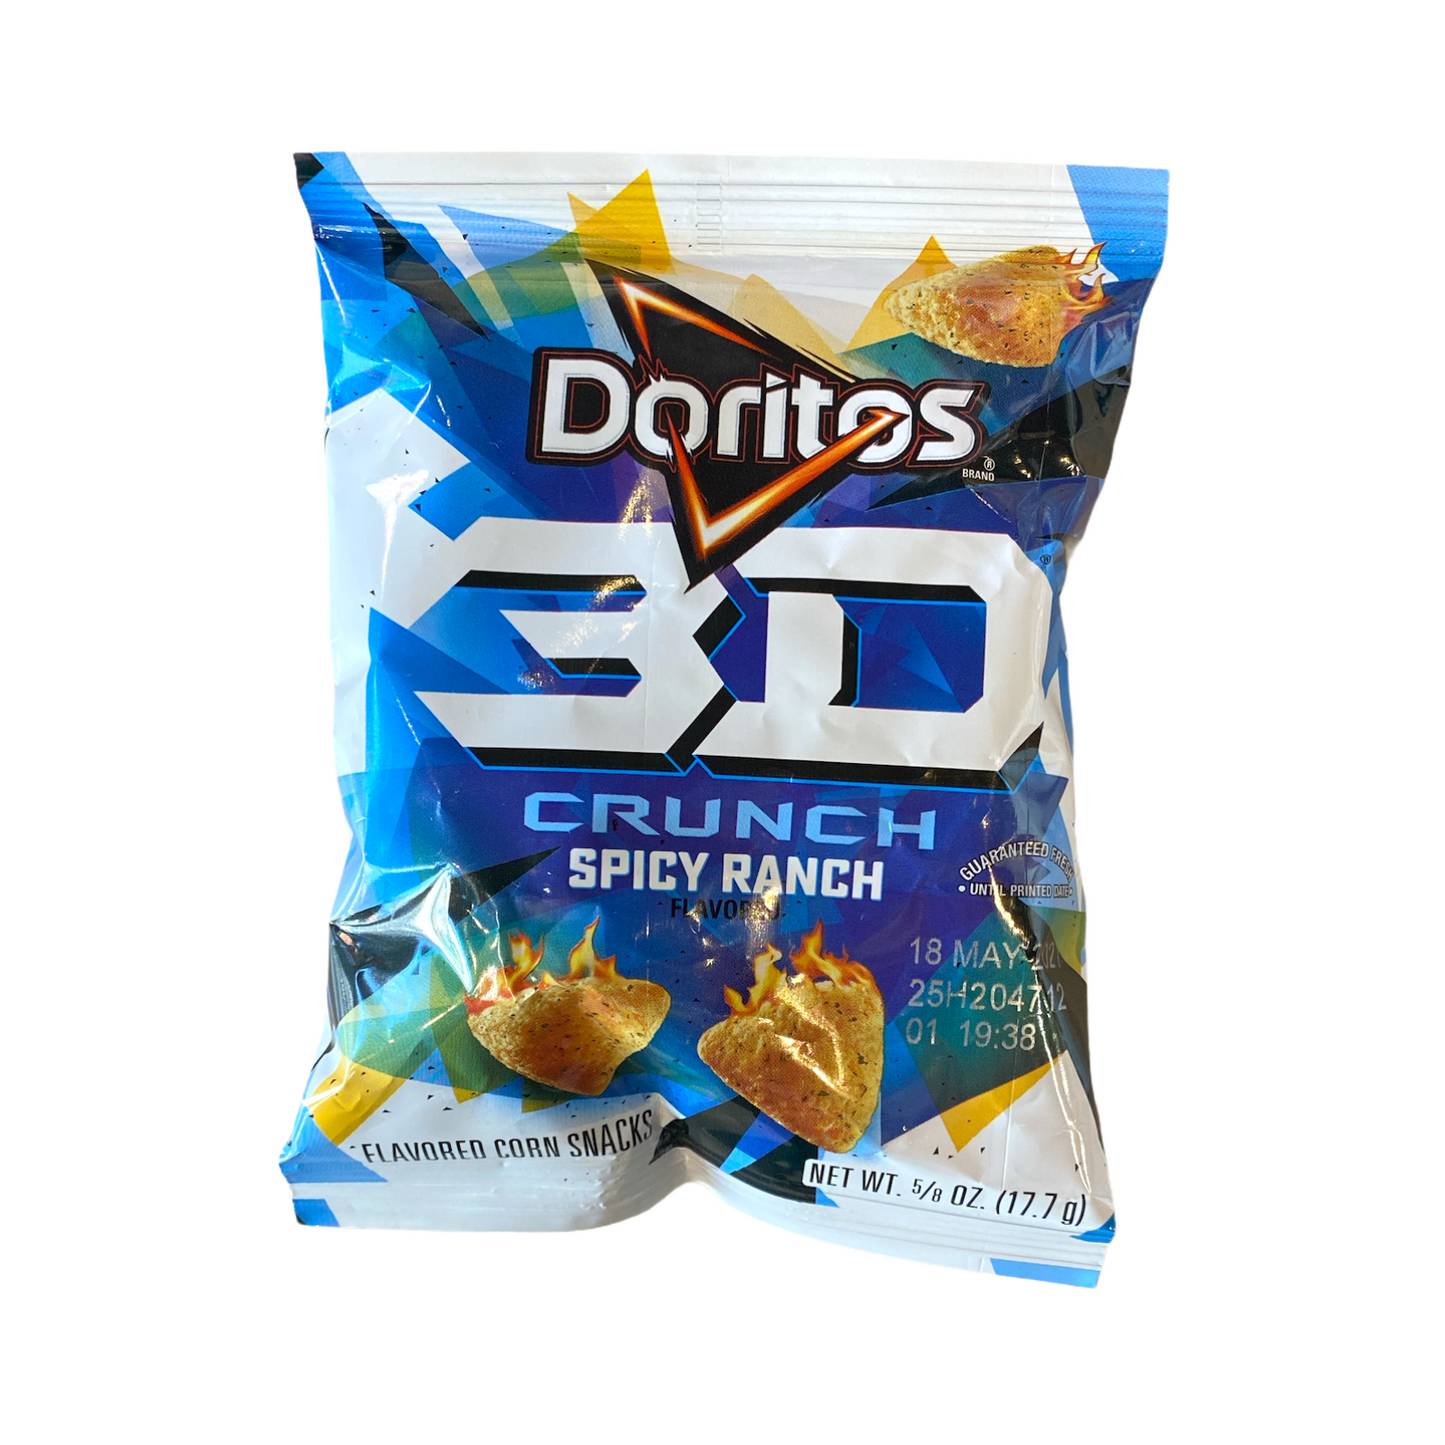 Doritos 3D Crunch Spicy Ranch Flavored Corn Snacks, 17.7g